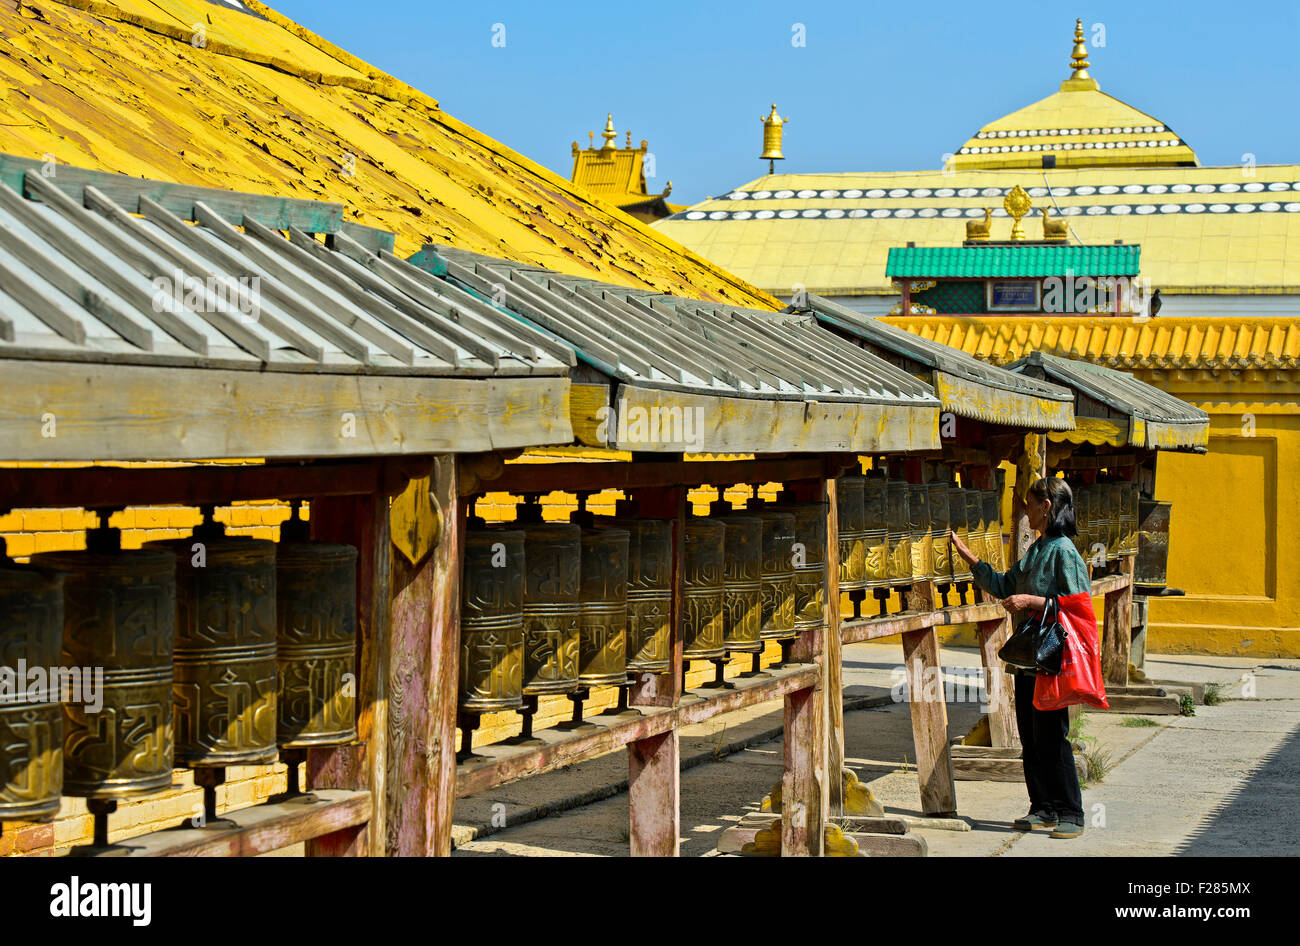 Buddhist visitor turningp rayer mills in the Buddhist Gandan Monastery, Ulaanbaatar, Mongolia Stock Photo